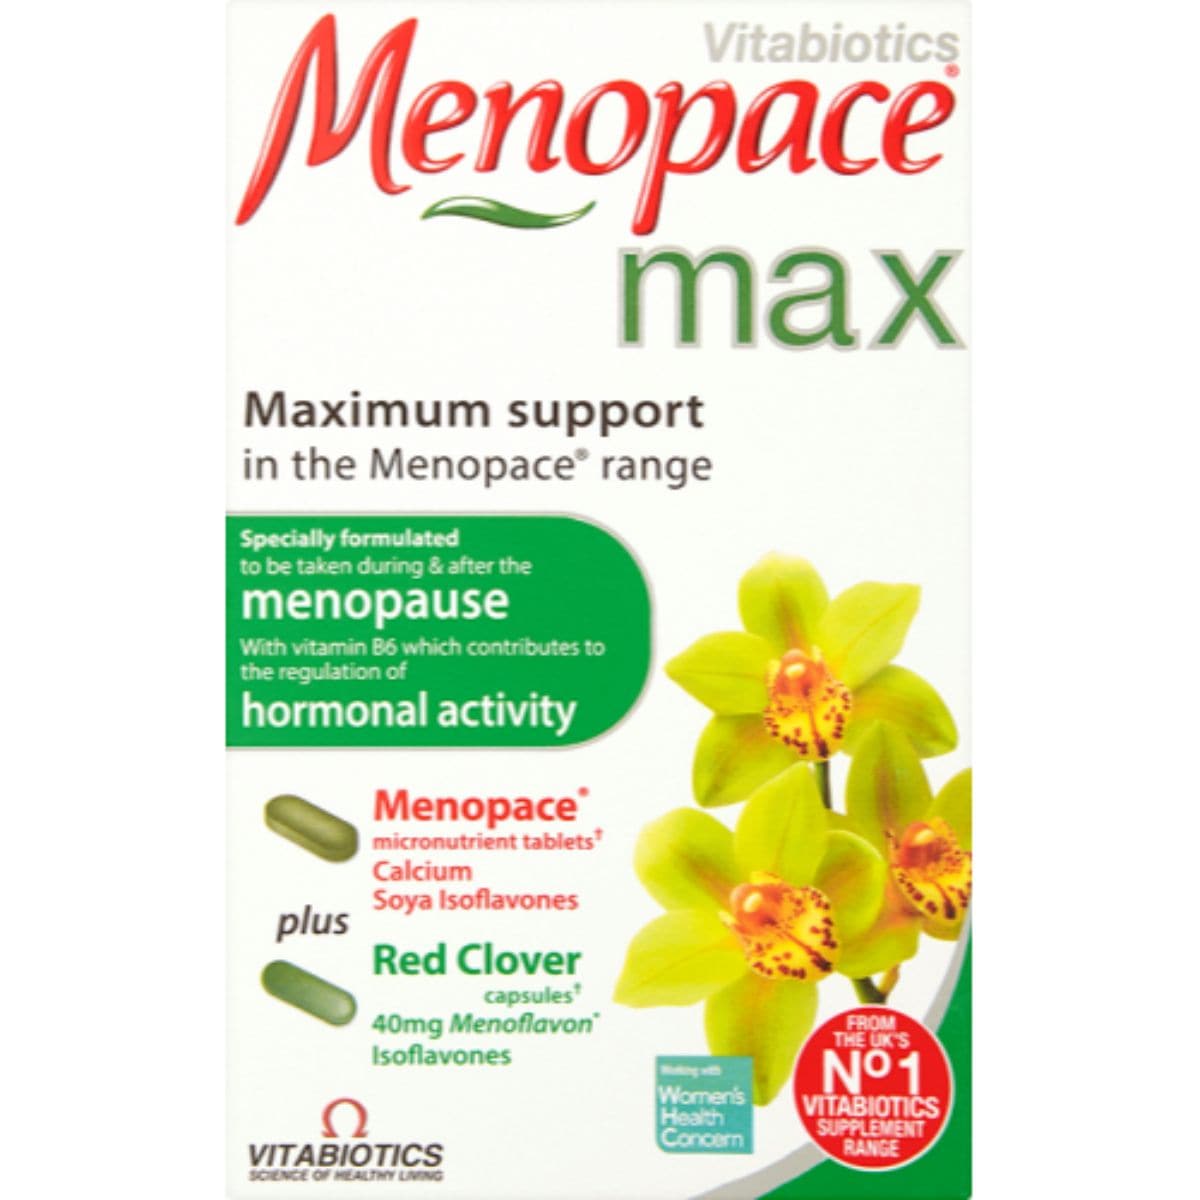 Vitabiotics Menopace Max Capsules & Tablets 28+56s - SoulBia